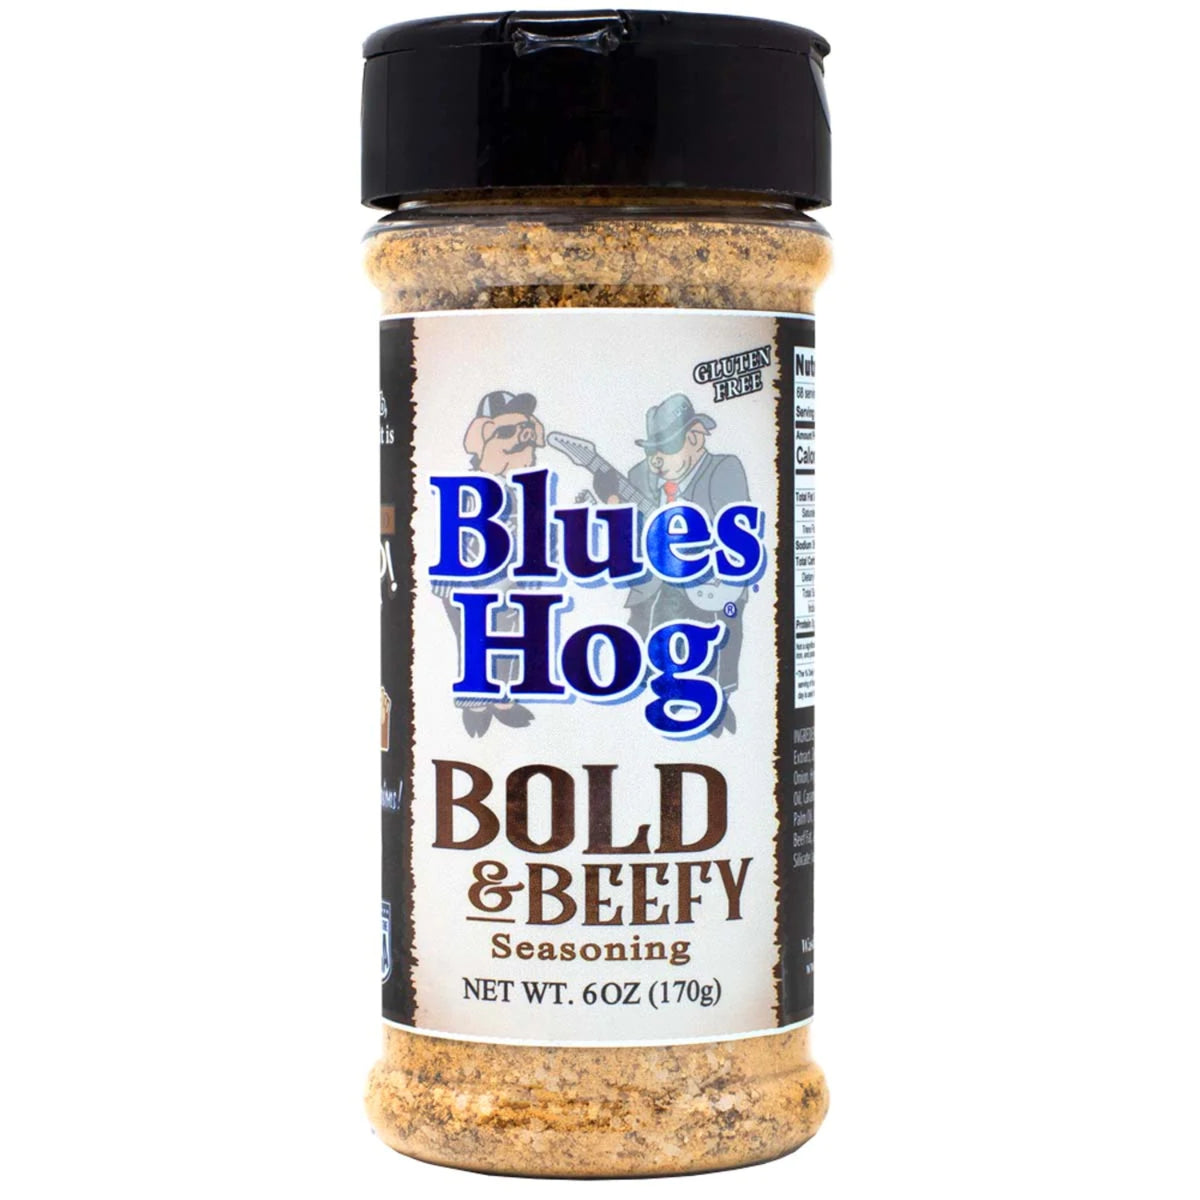 BLUE'S HOG Bold & Beefy Dry Rub